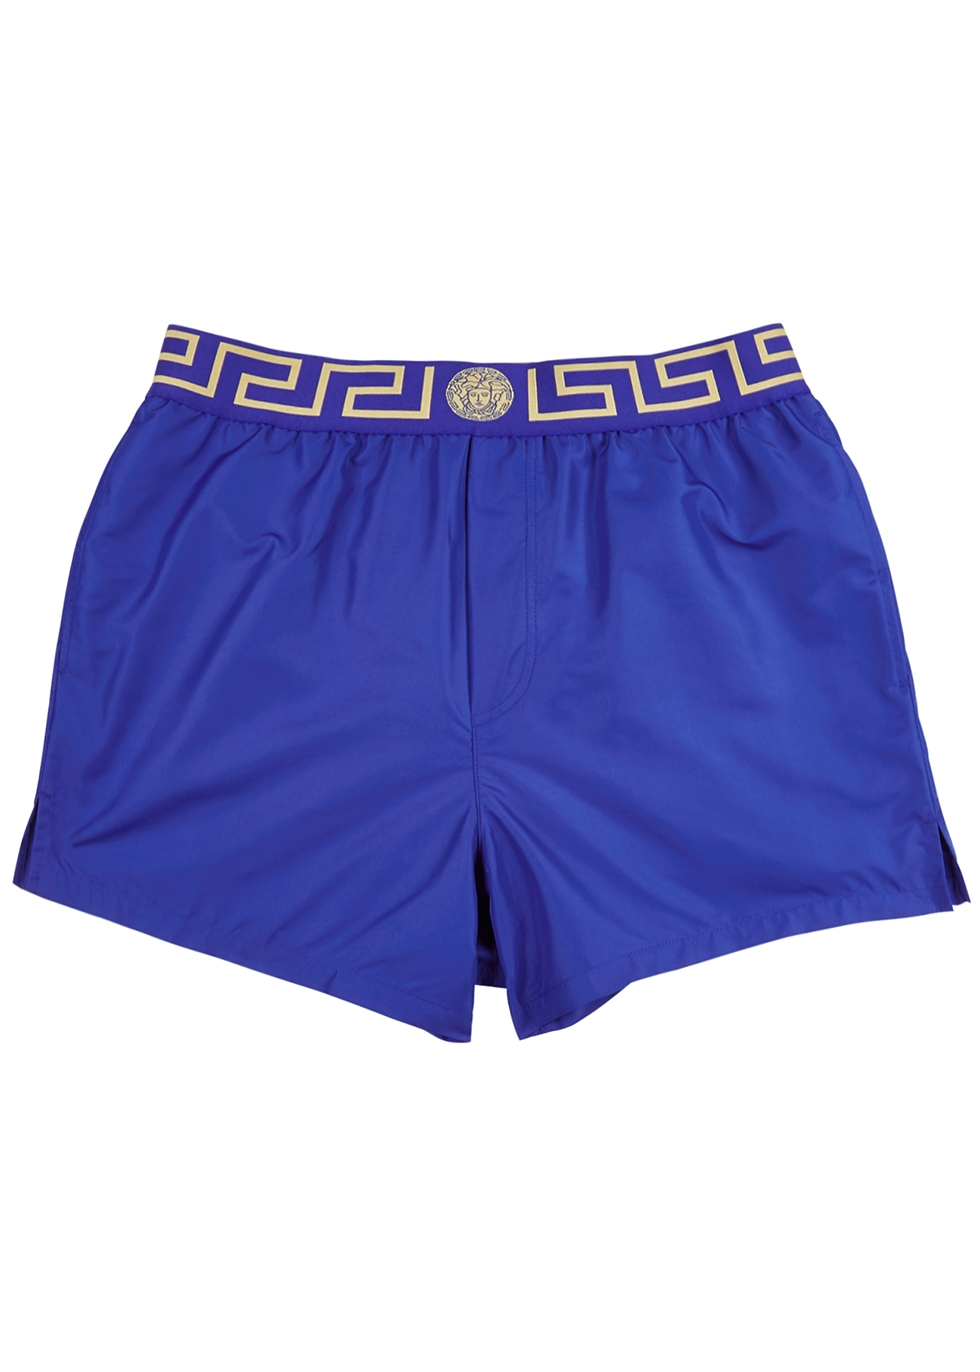 Blue shell swim shorts